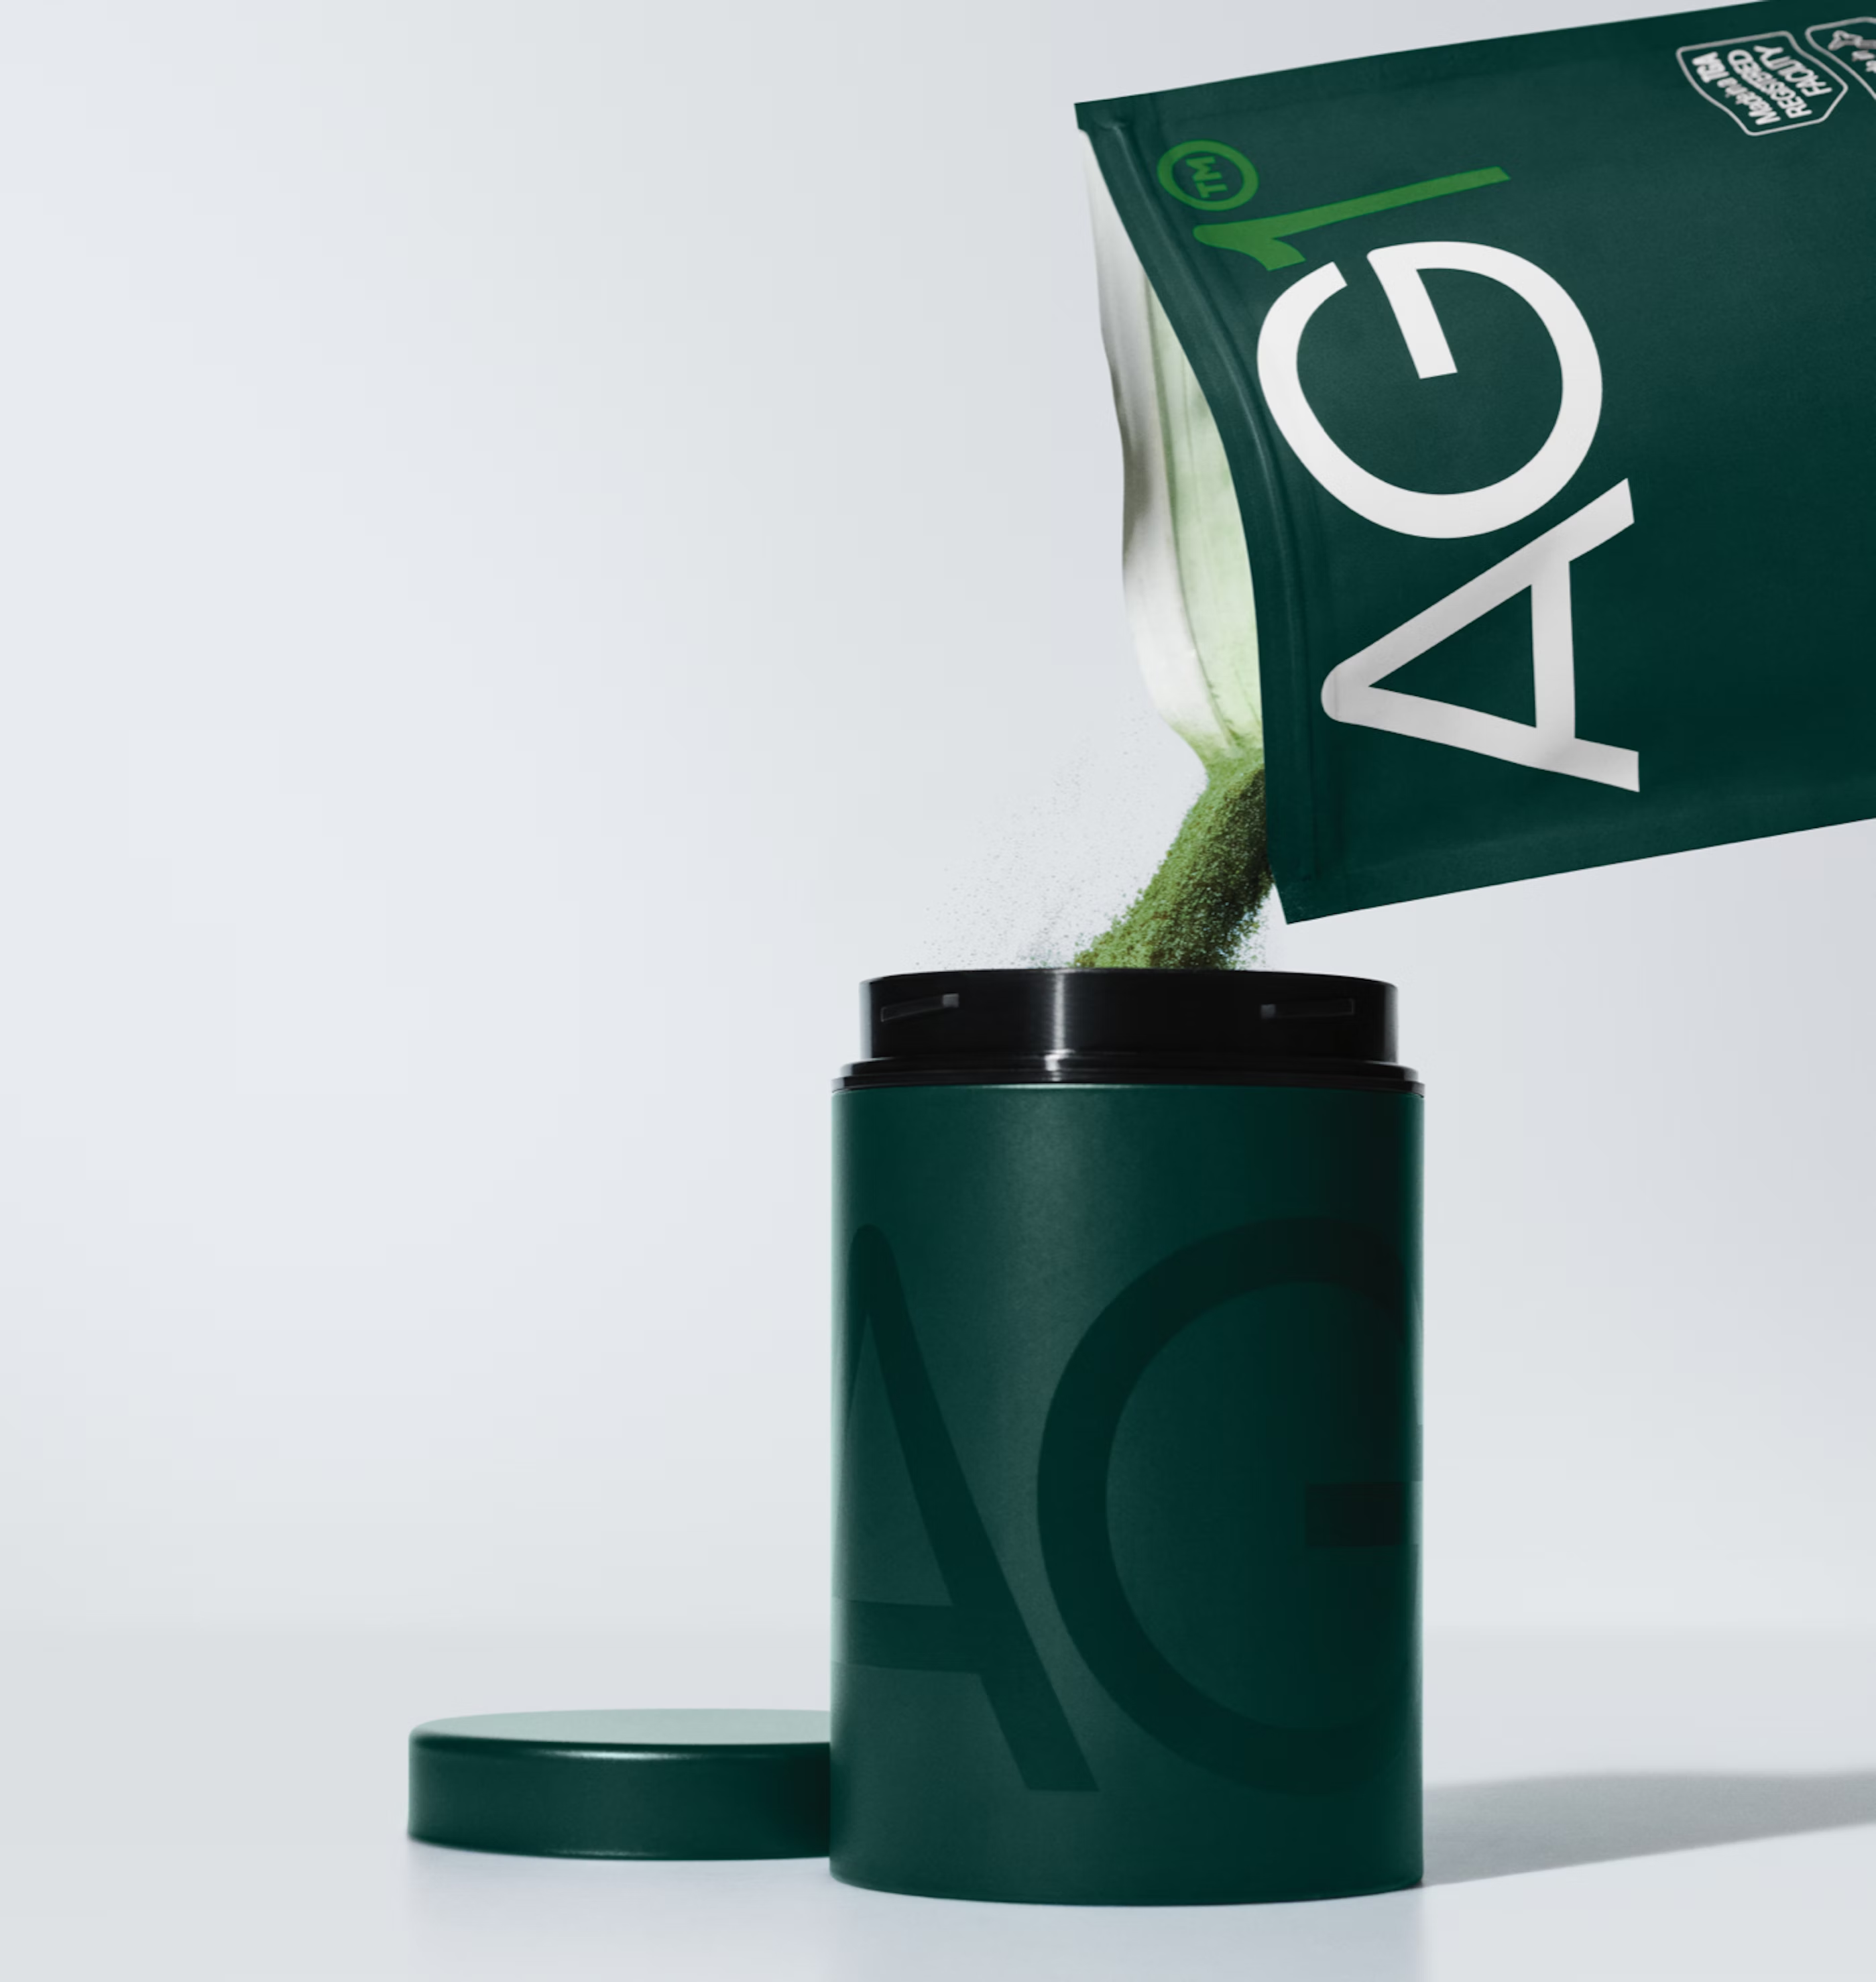 AG1 Athletic Greens bottle: Free promotion for December 2023